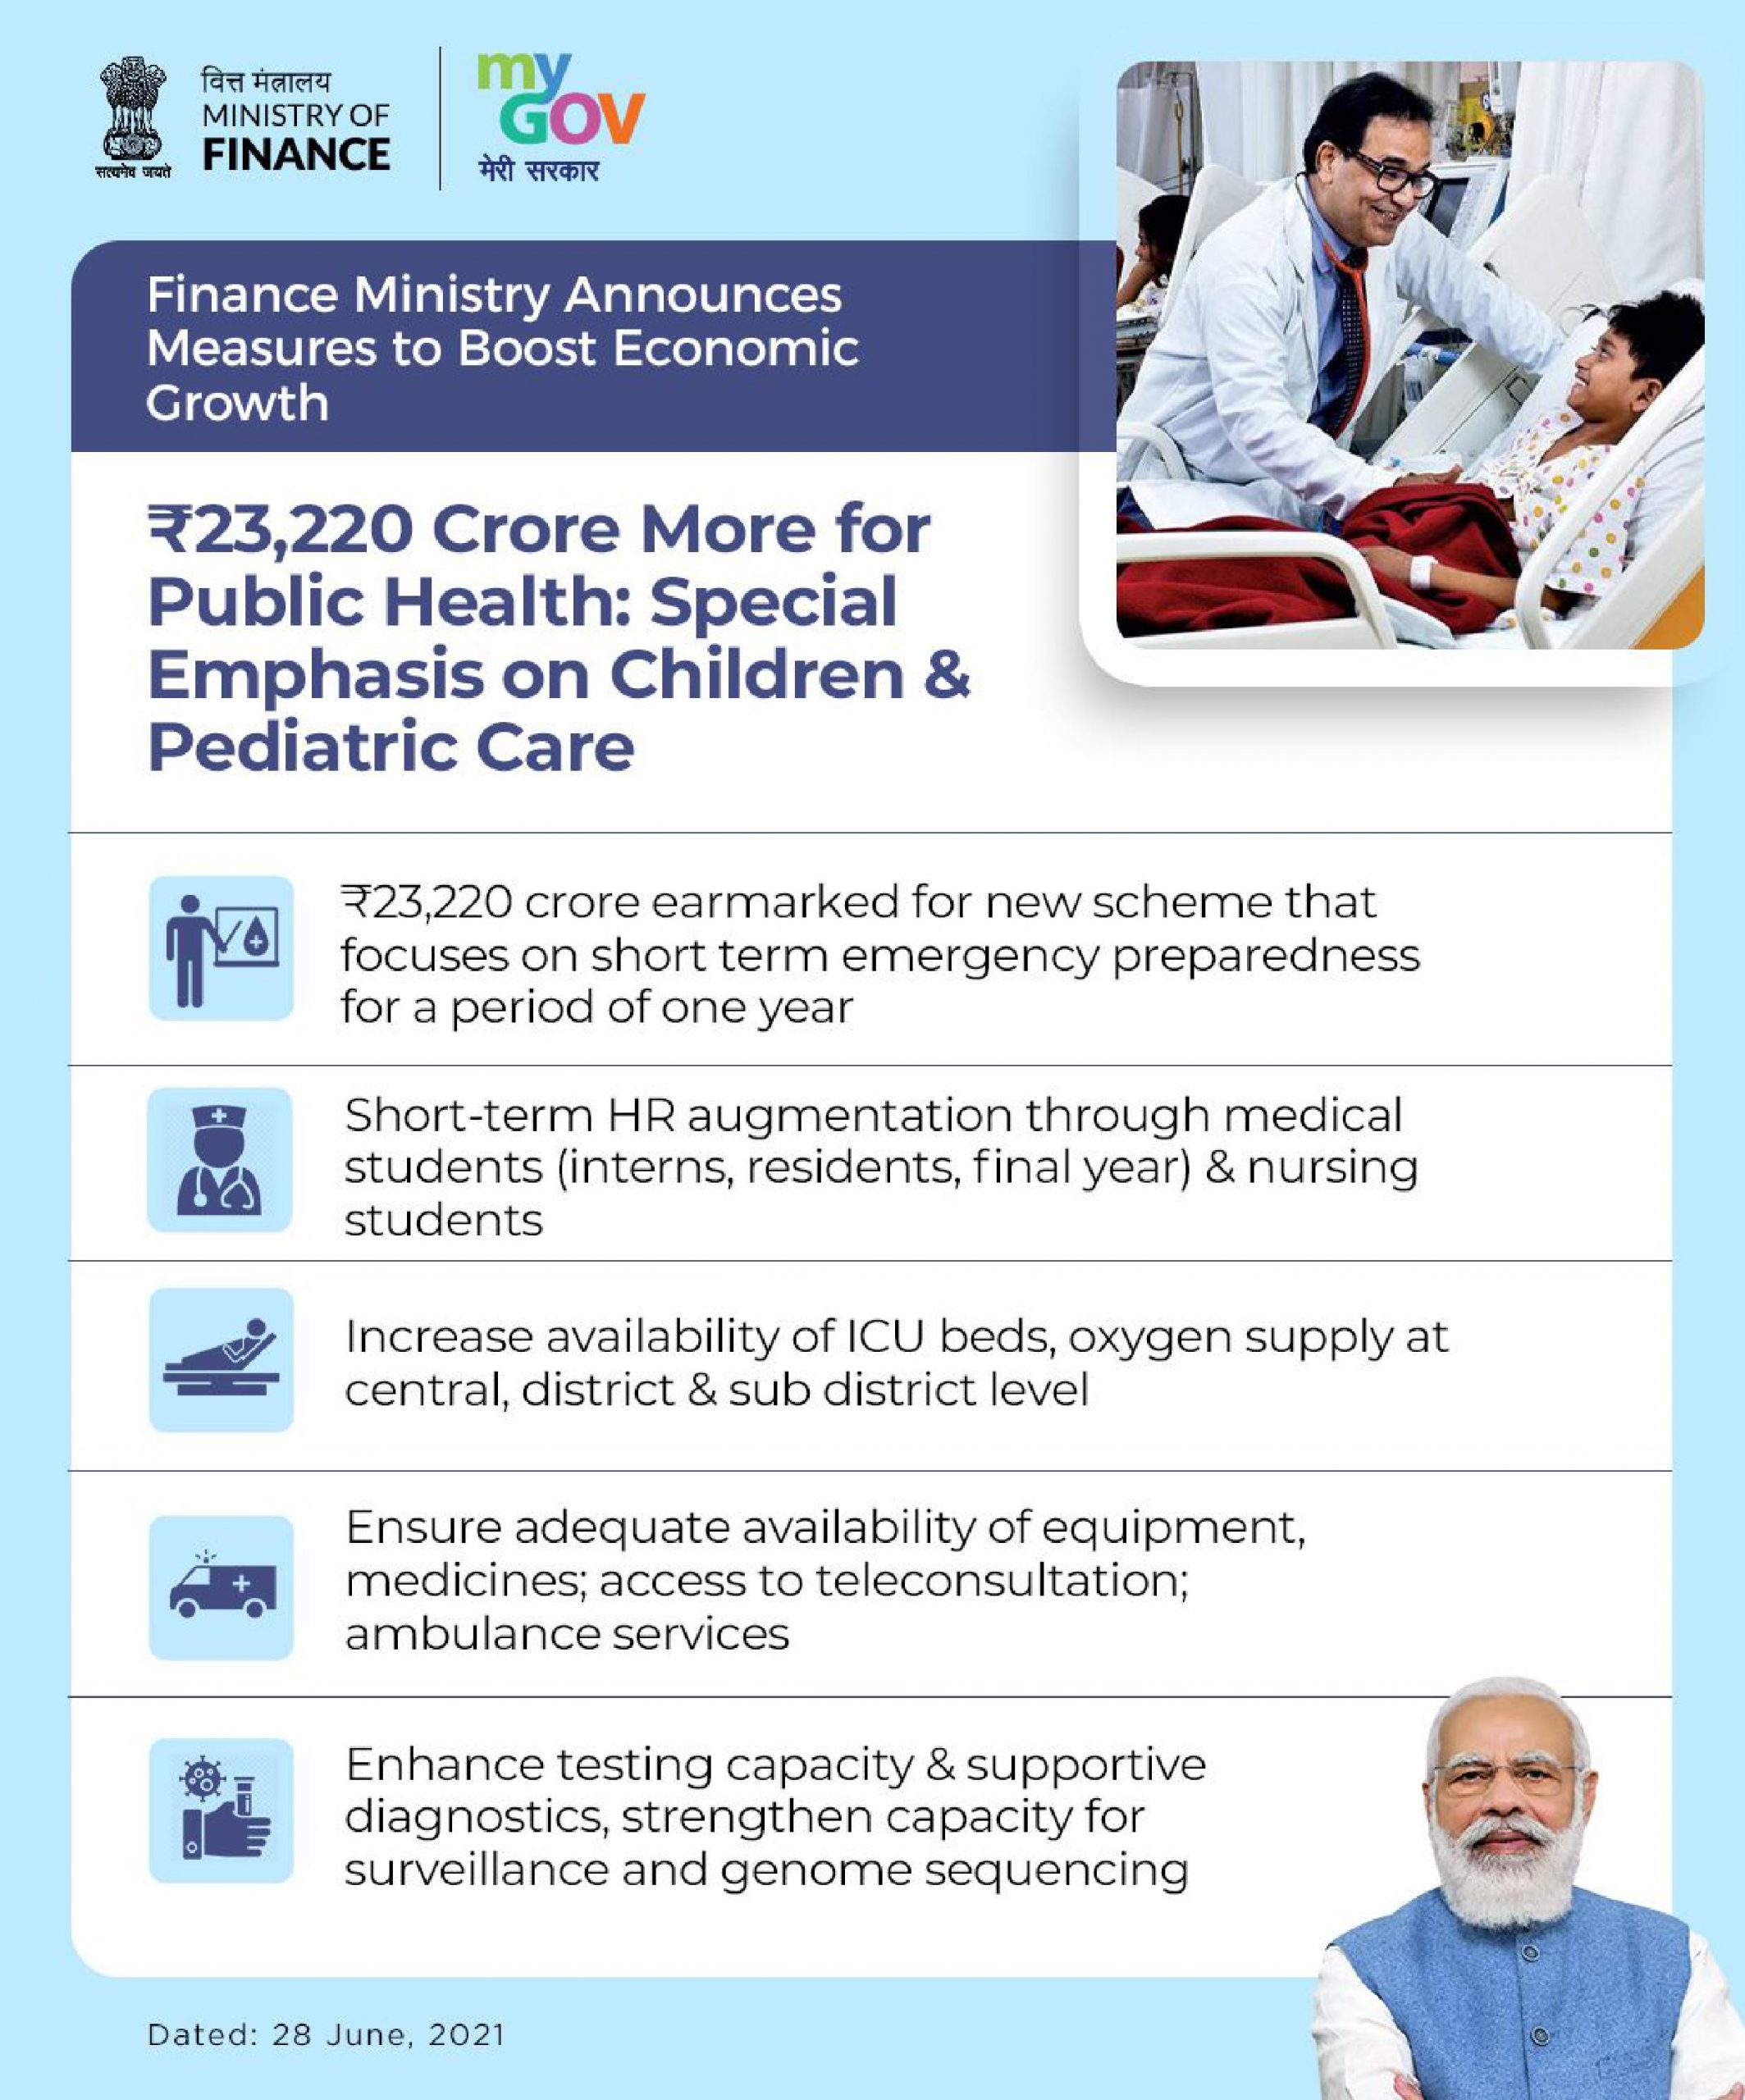 ₹23,220 Crore More for Public Health: Special Emphasis on Children & Pediatric Care